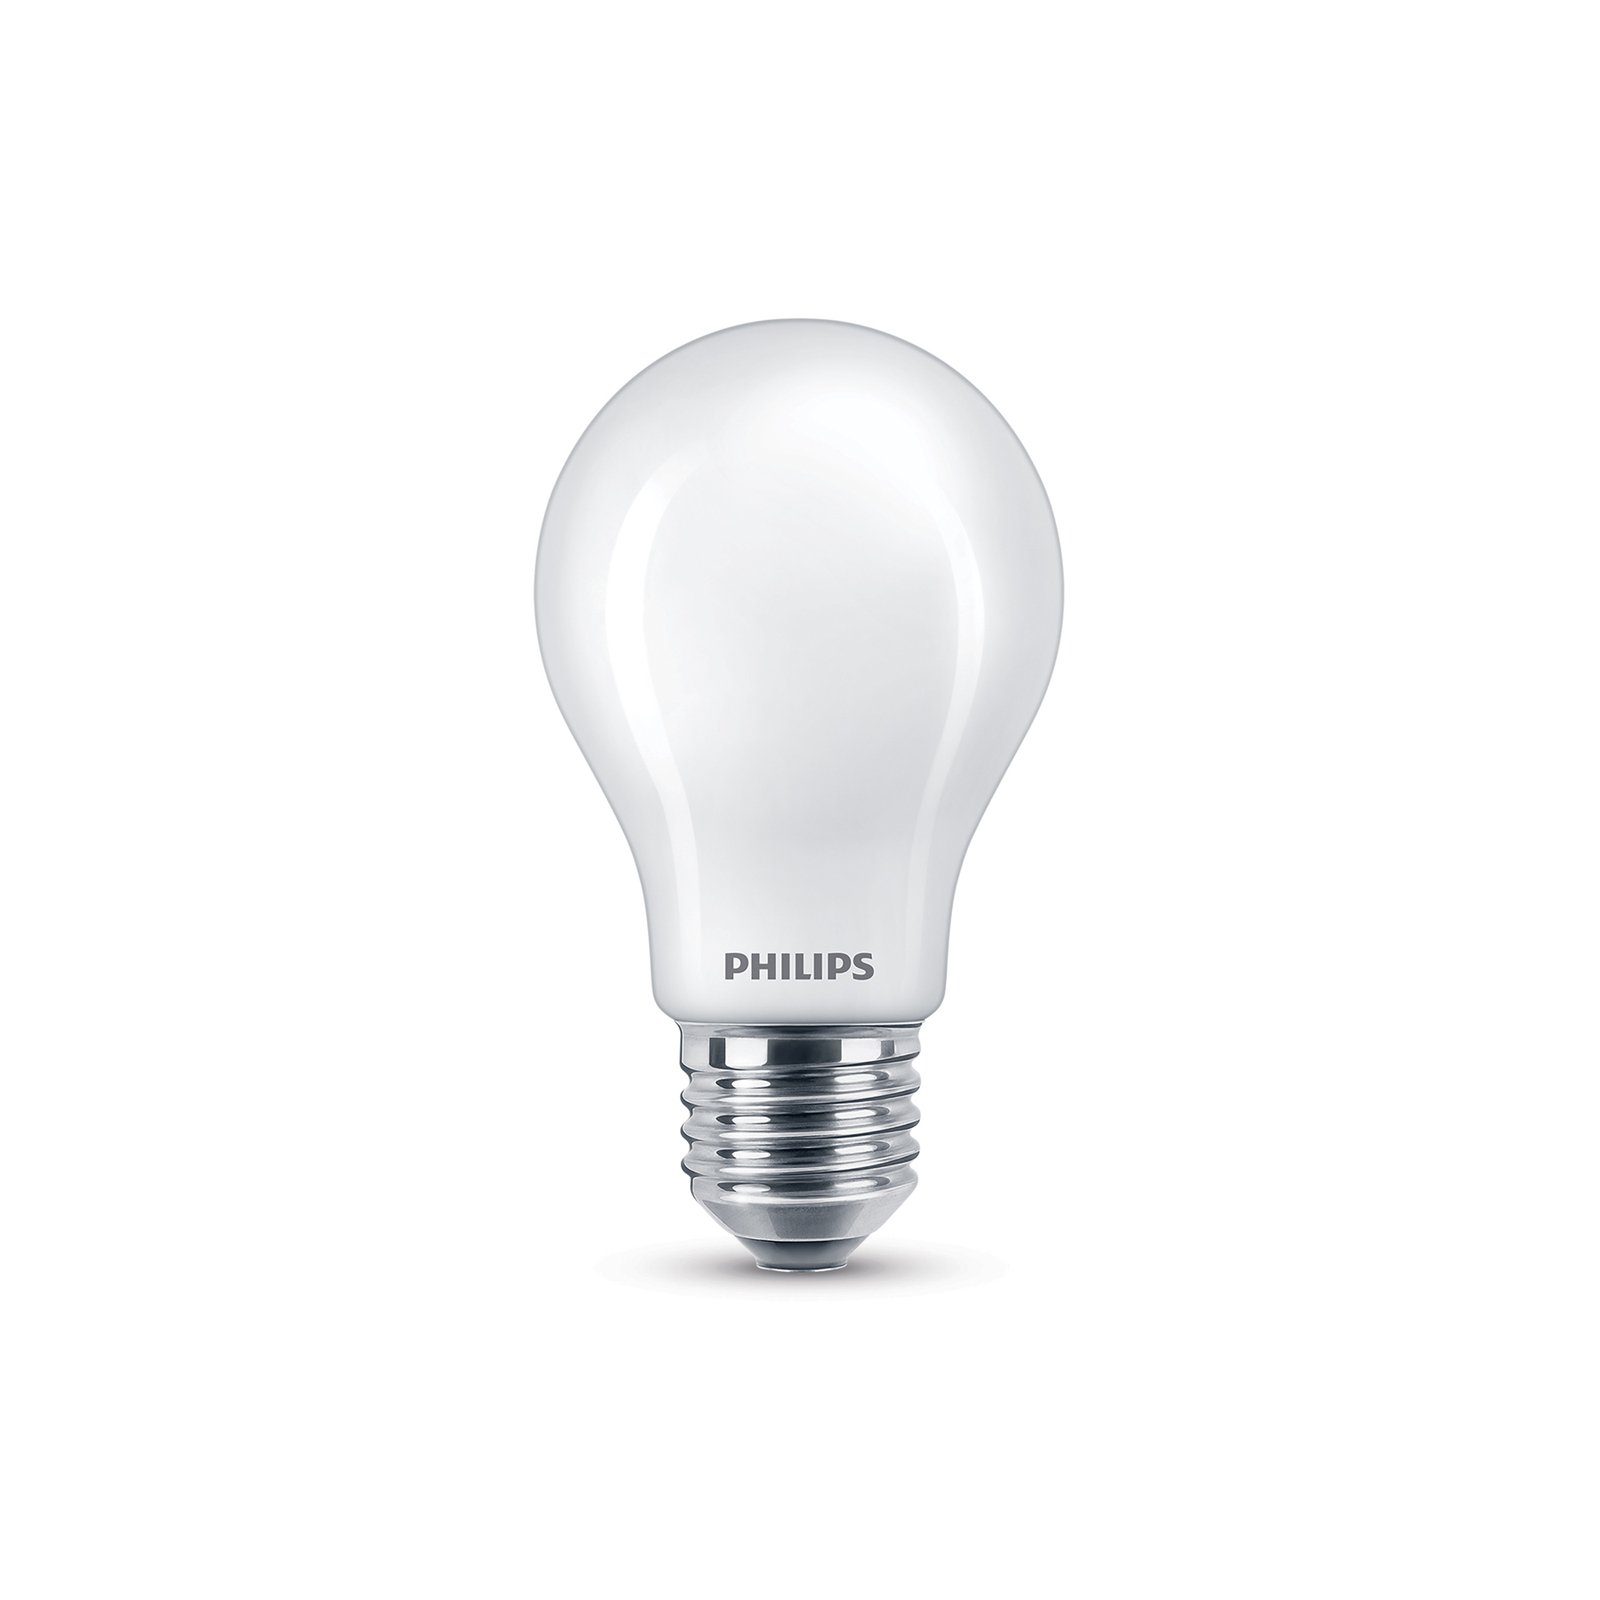 Philips LED žiarovka E27 4,5W 2700K opálová 2 kusy